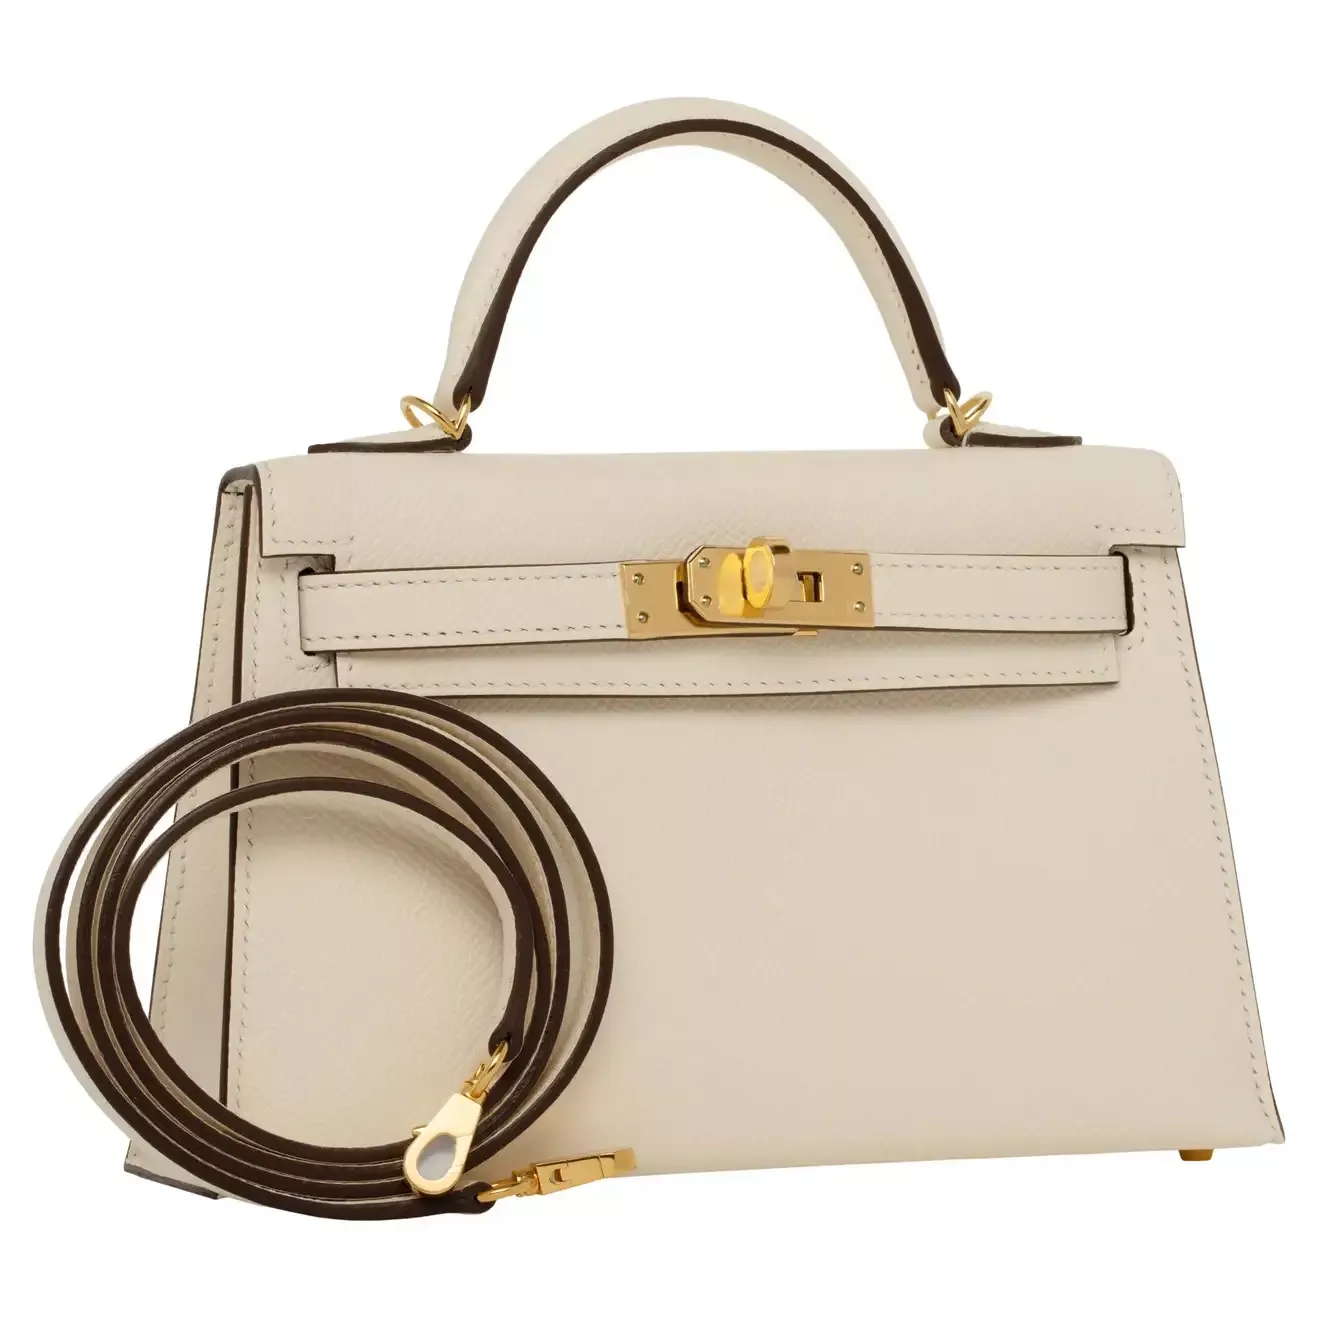 Prada Cleo Flap leather handbag curated on LTK